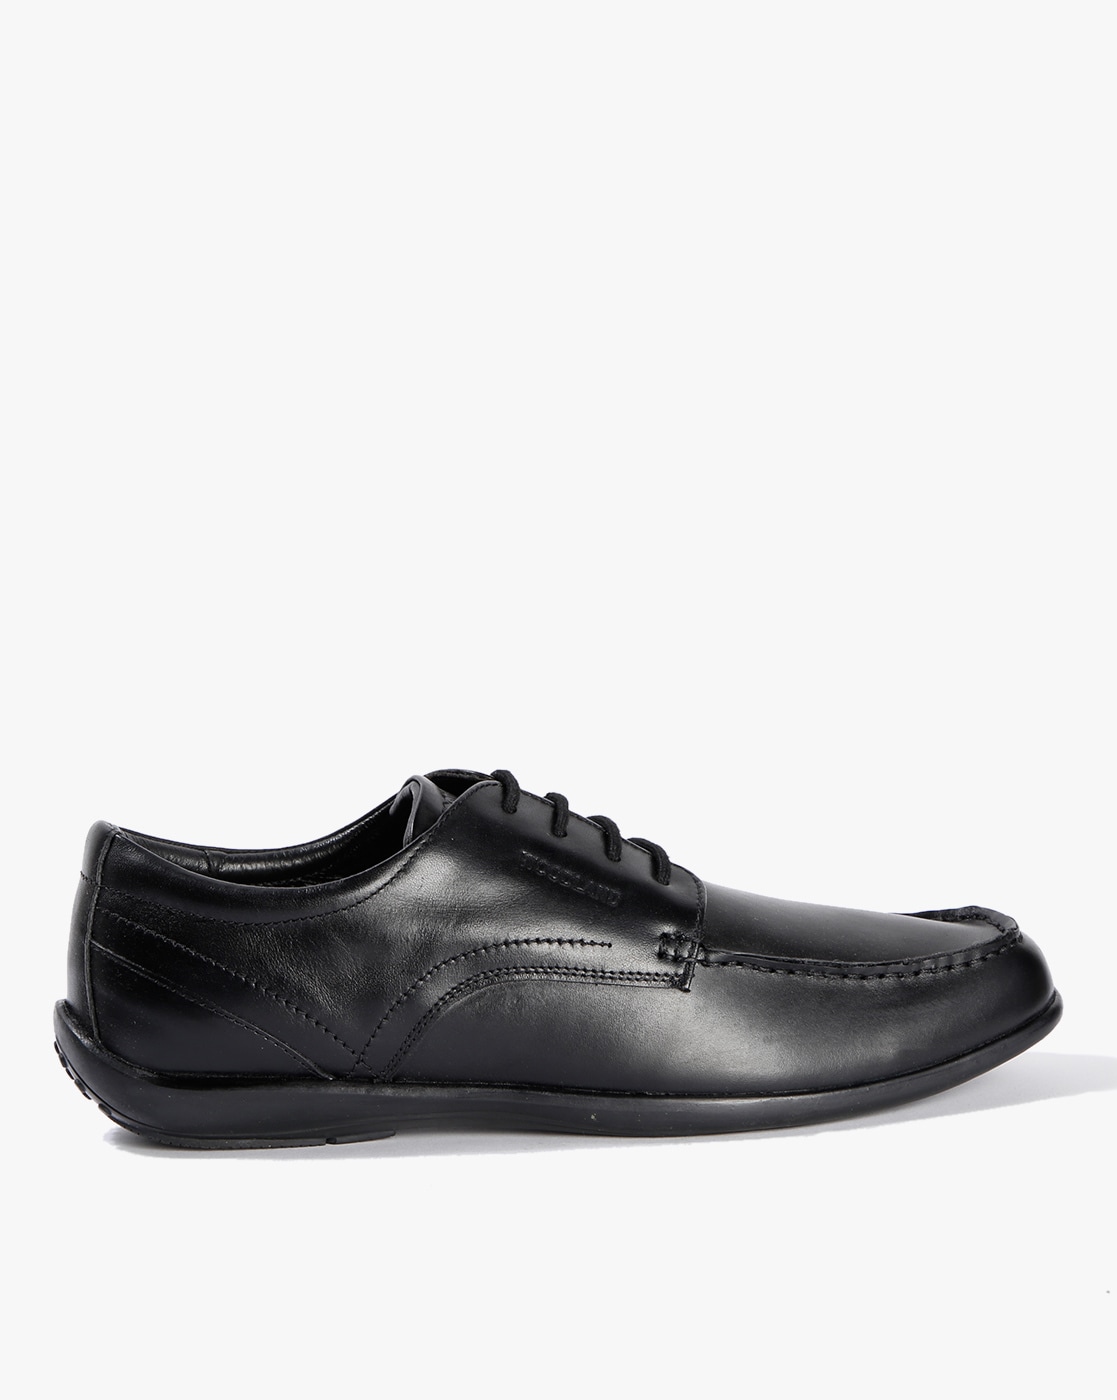 woodland shoes new model black